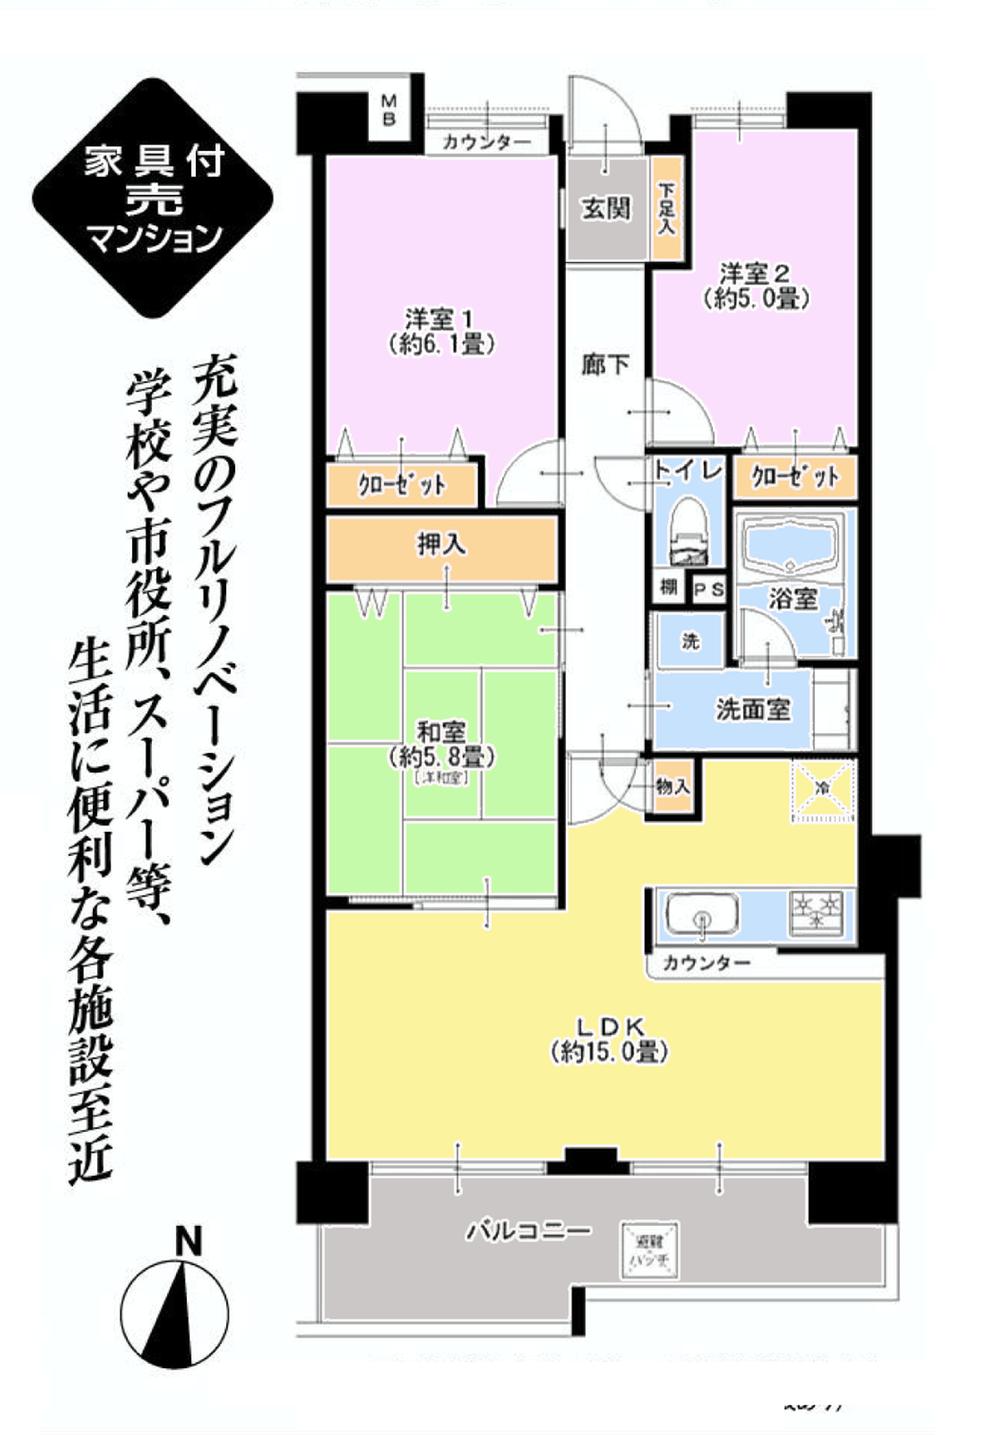 Floor plan. 3LDK, Price 33,900,000 yen, Occupied area 71.55 sq m , Balcony area 10.12 sq m 71.55 sq m  3LDK